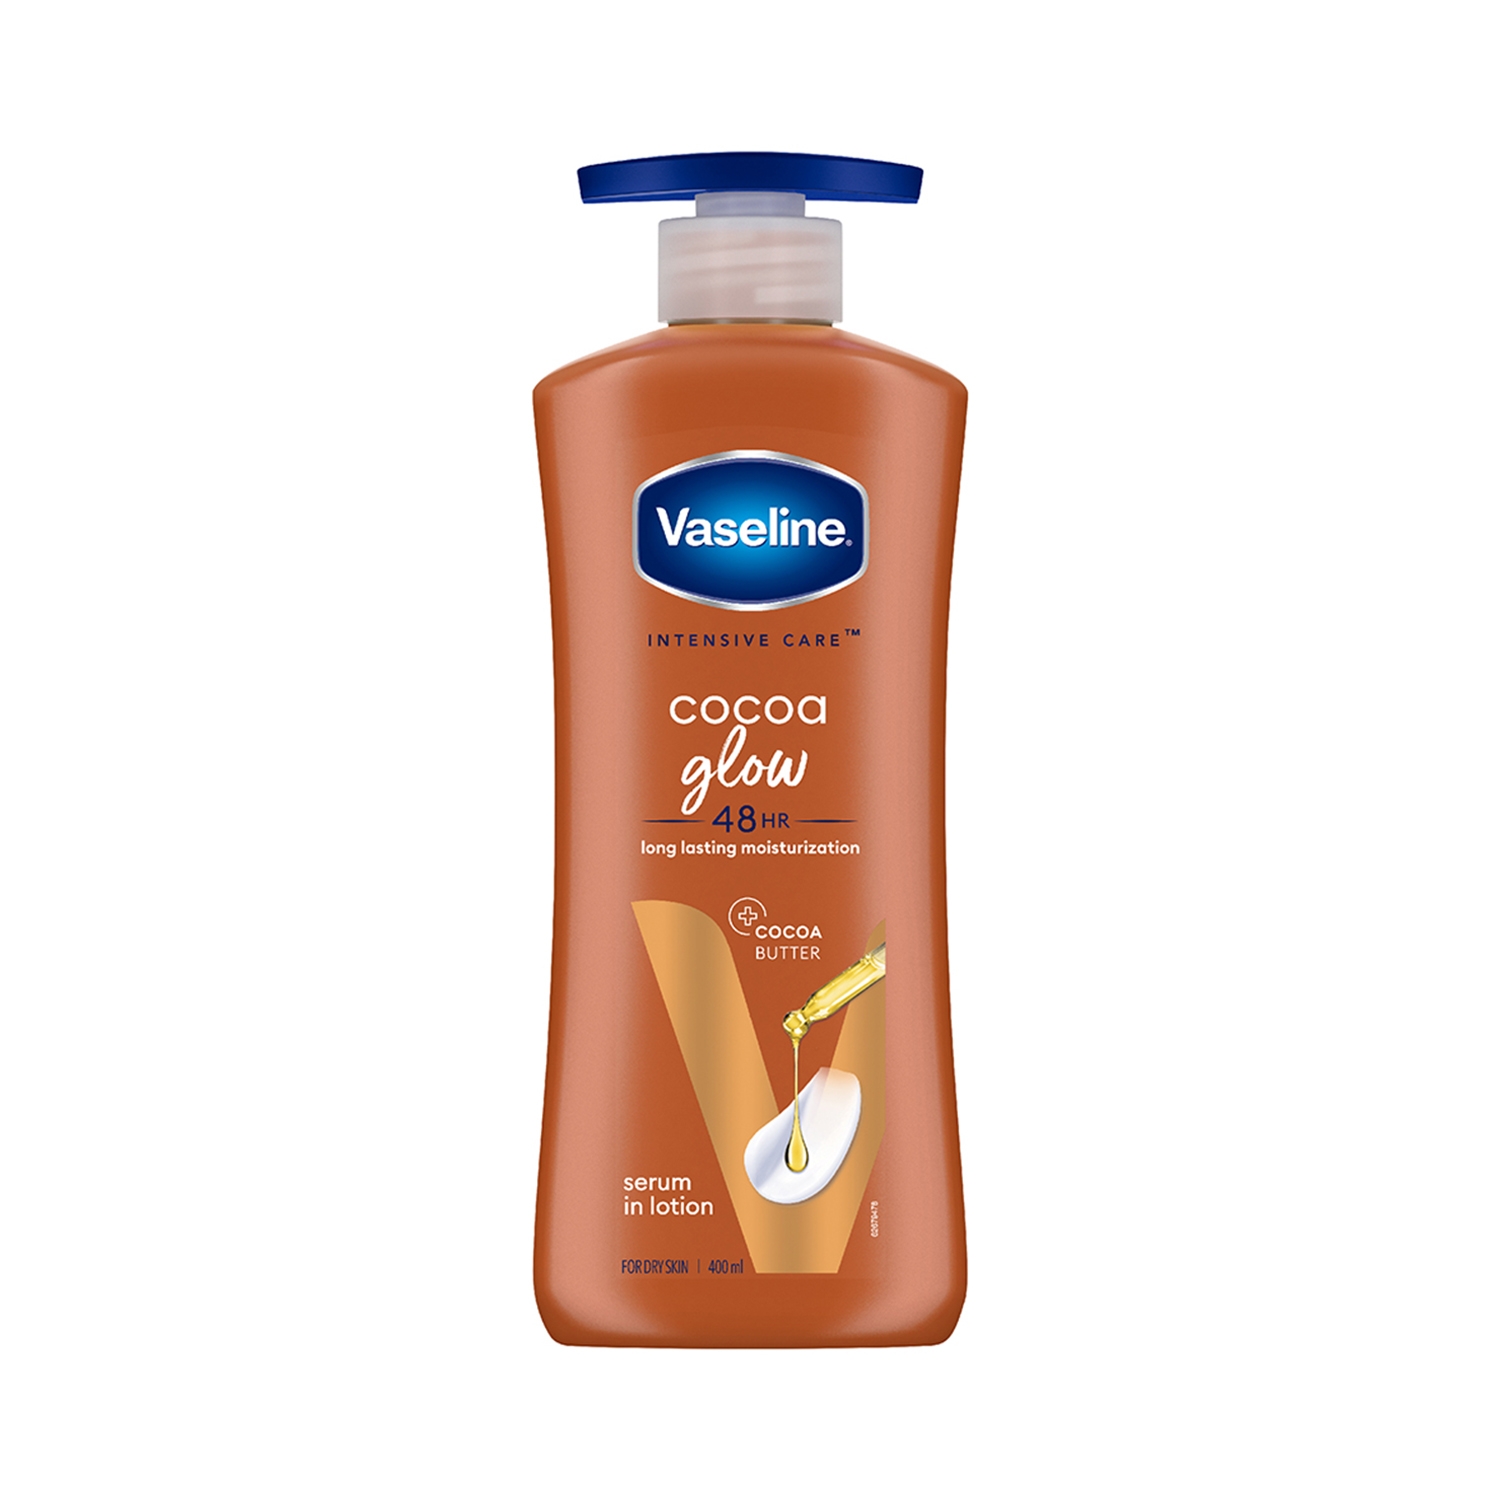 Vaseline | Vaseline Intensive Care Cocoa Glow Body Lotion - (400ml)